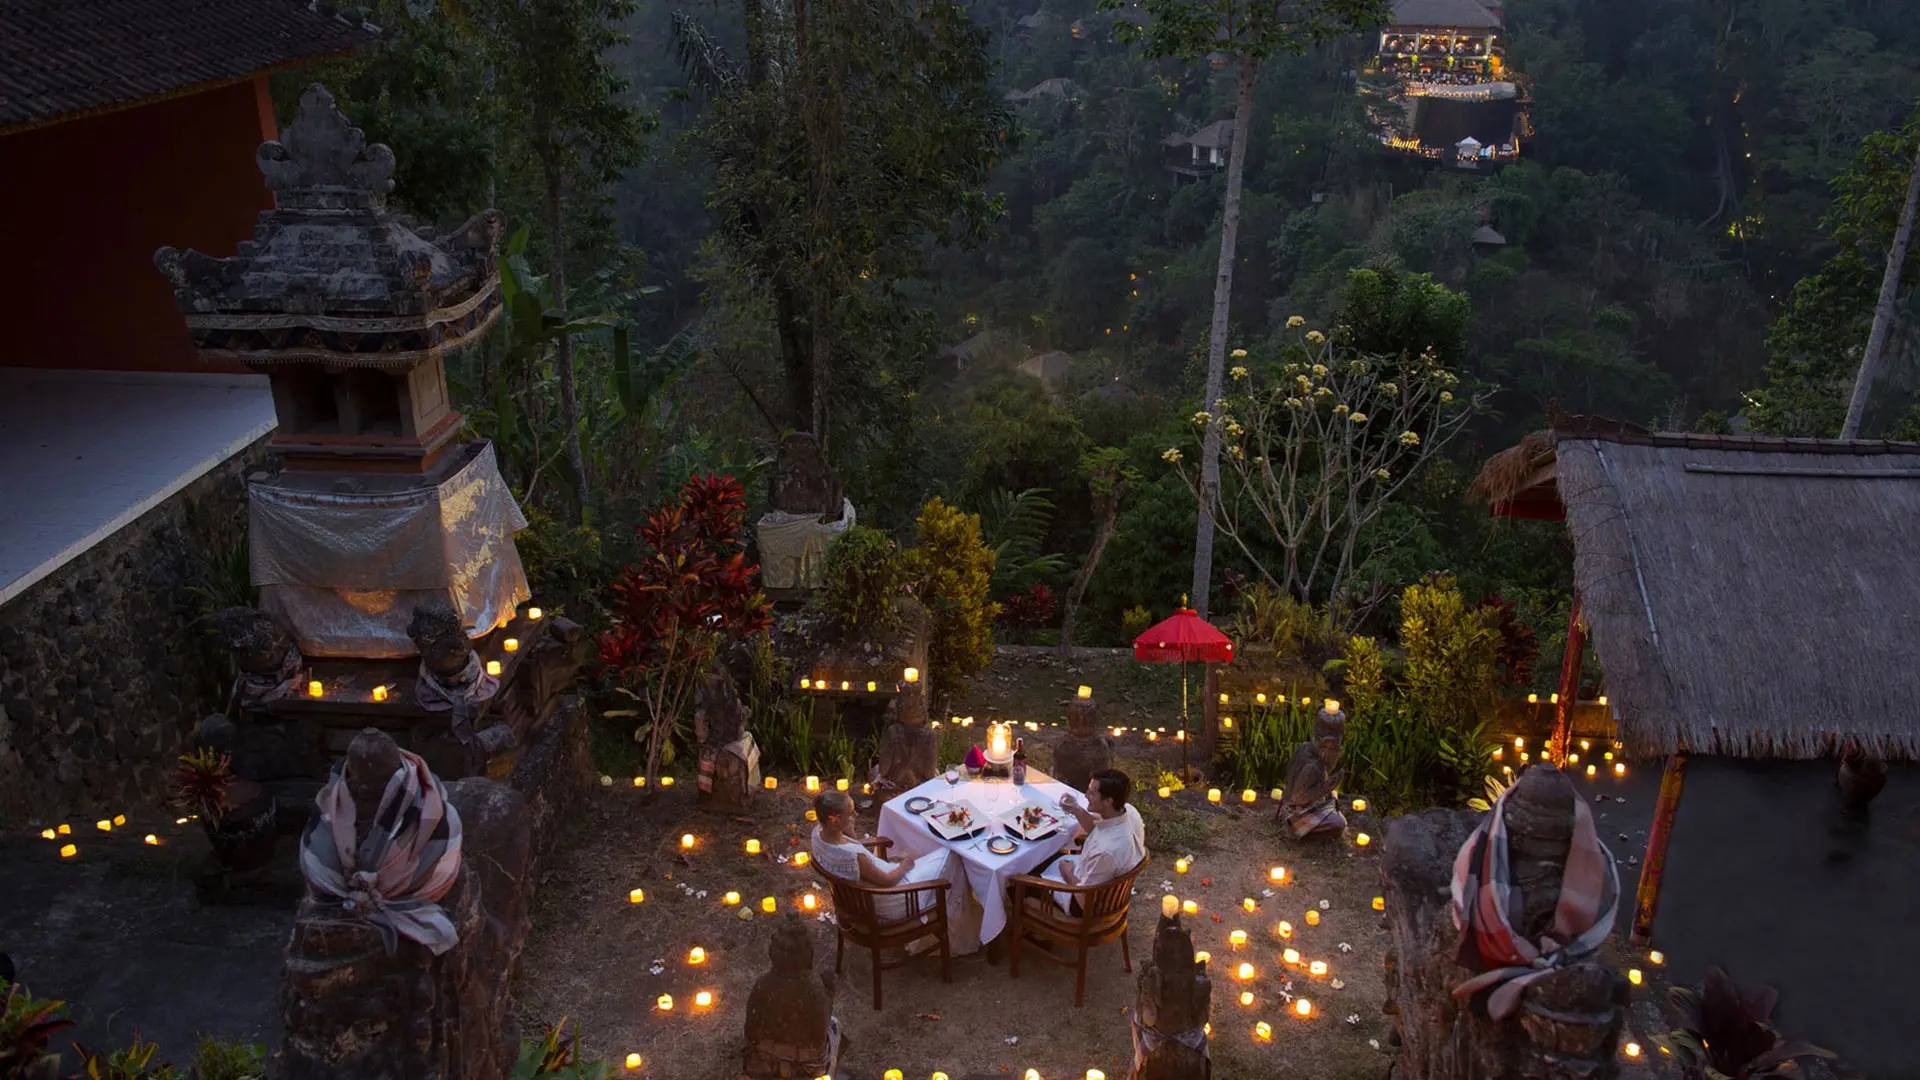 Bali All Inclusive Resort - Secret Romantic Dinner